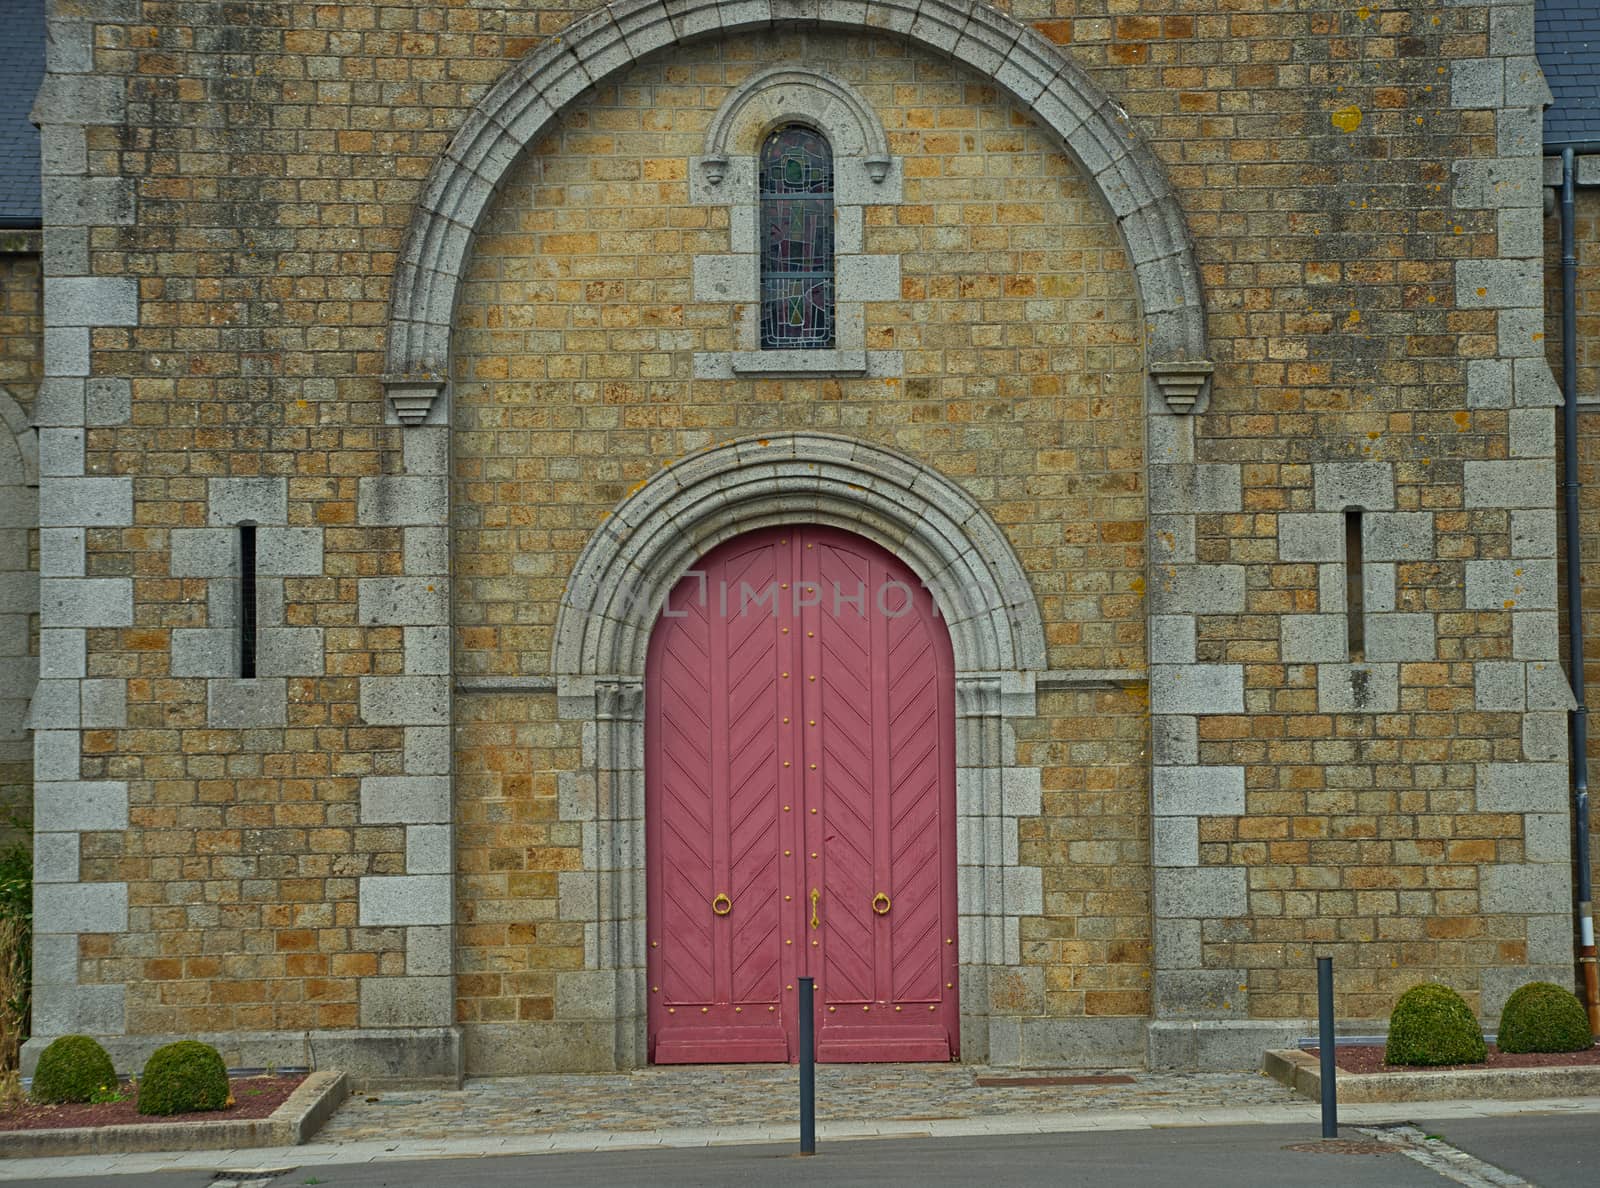 Main front entrance at big old stone catholic cathedral